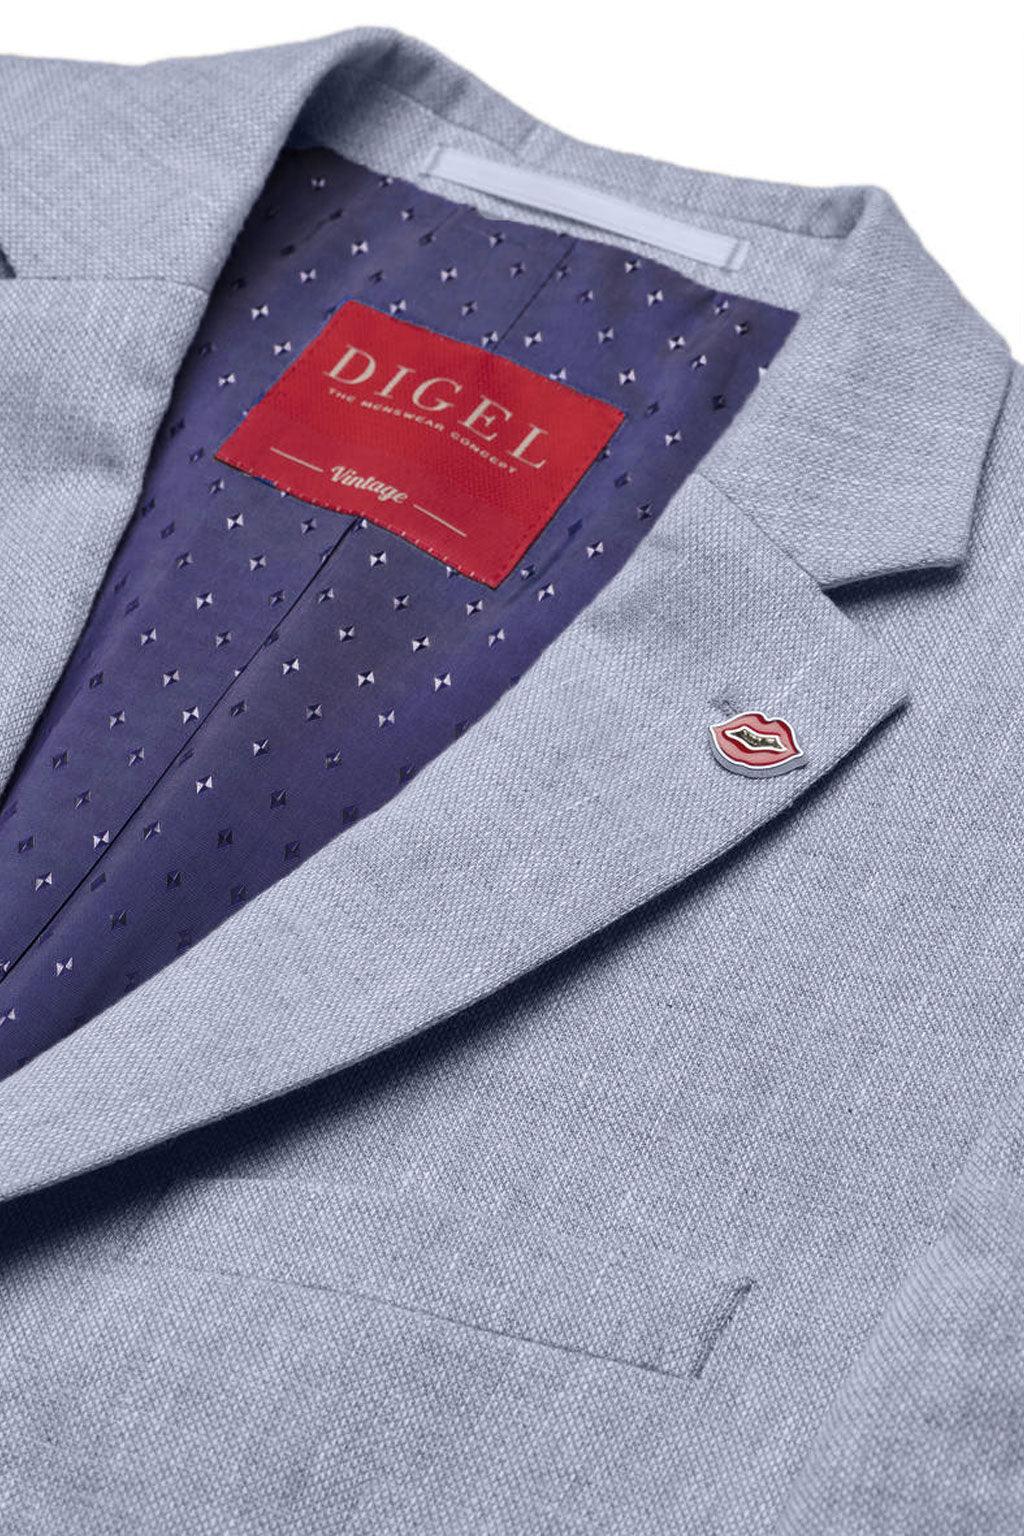 Digel suit blazer - Big Boss | the menswear concept